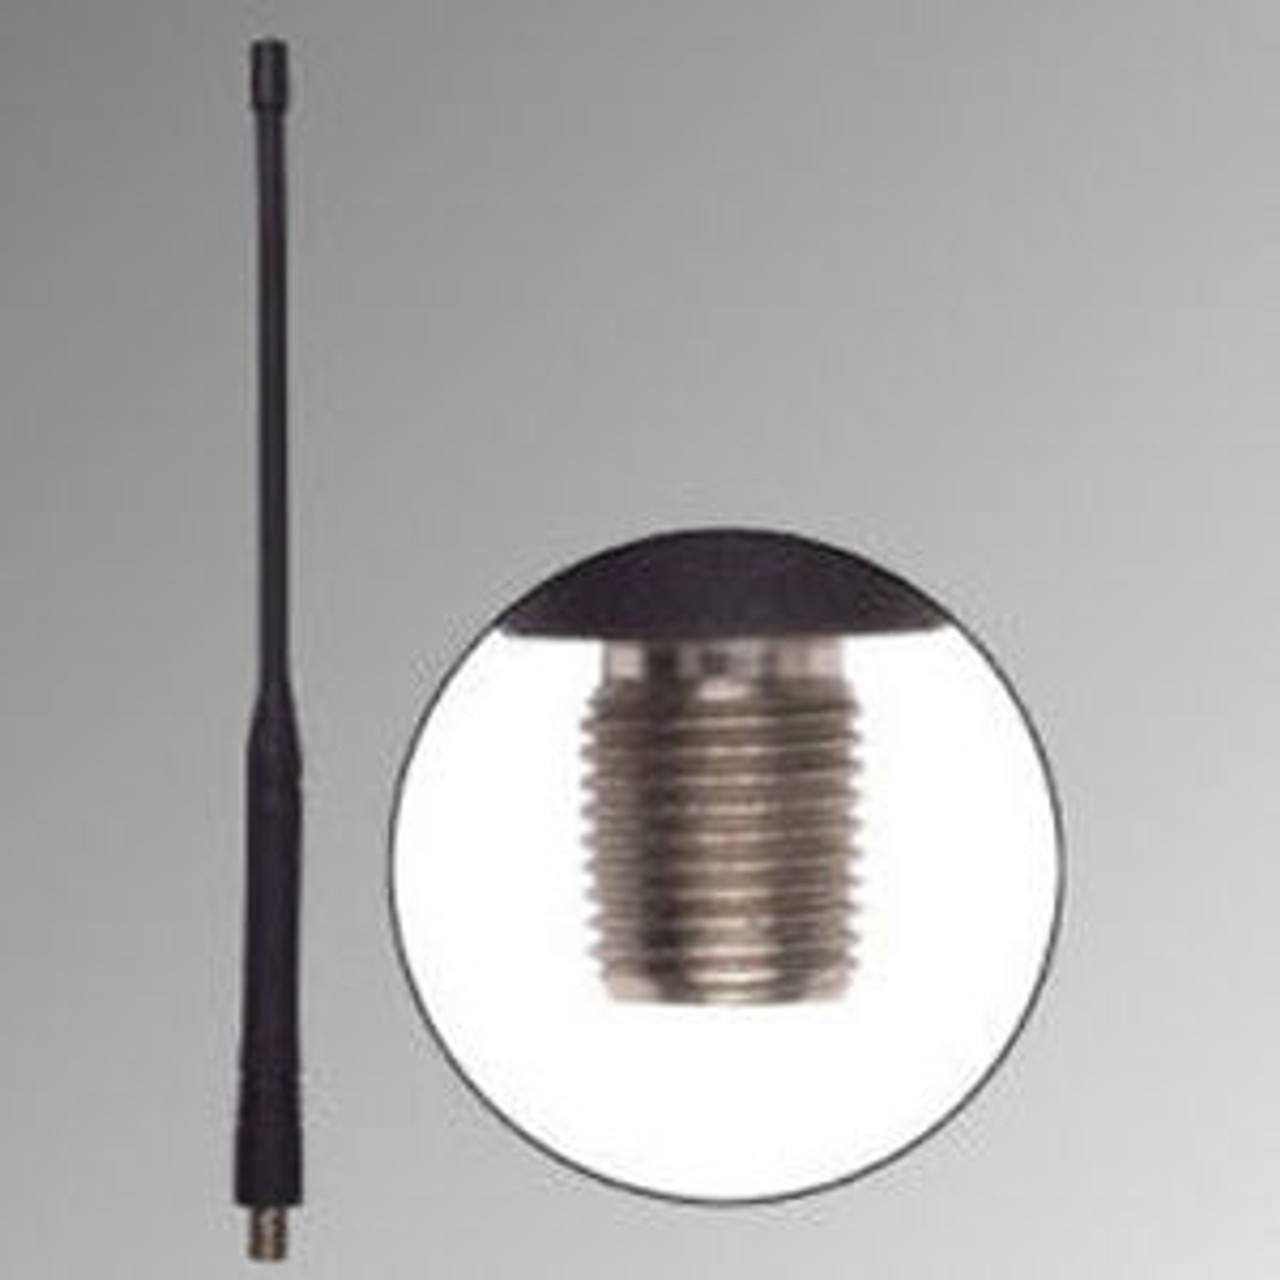 Bendix King EPX Long Range Antenna - 10.5", VHF, 165-175 MHz